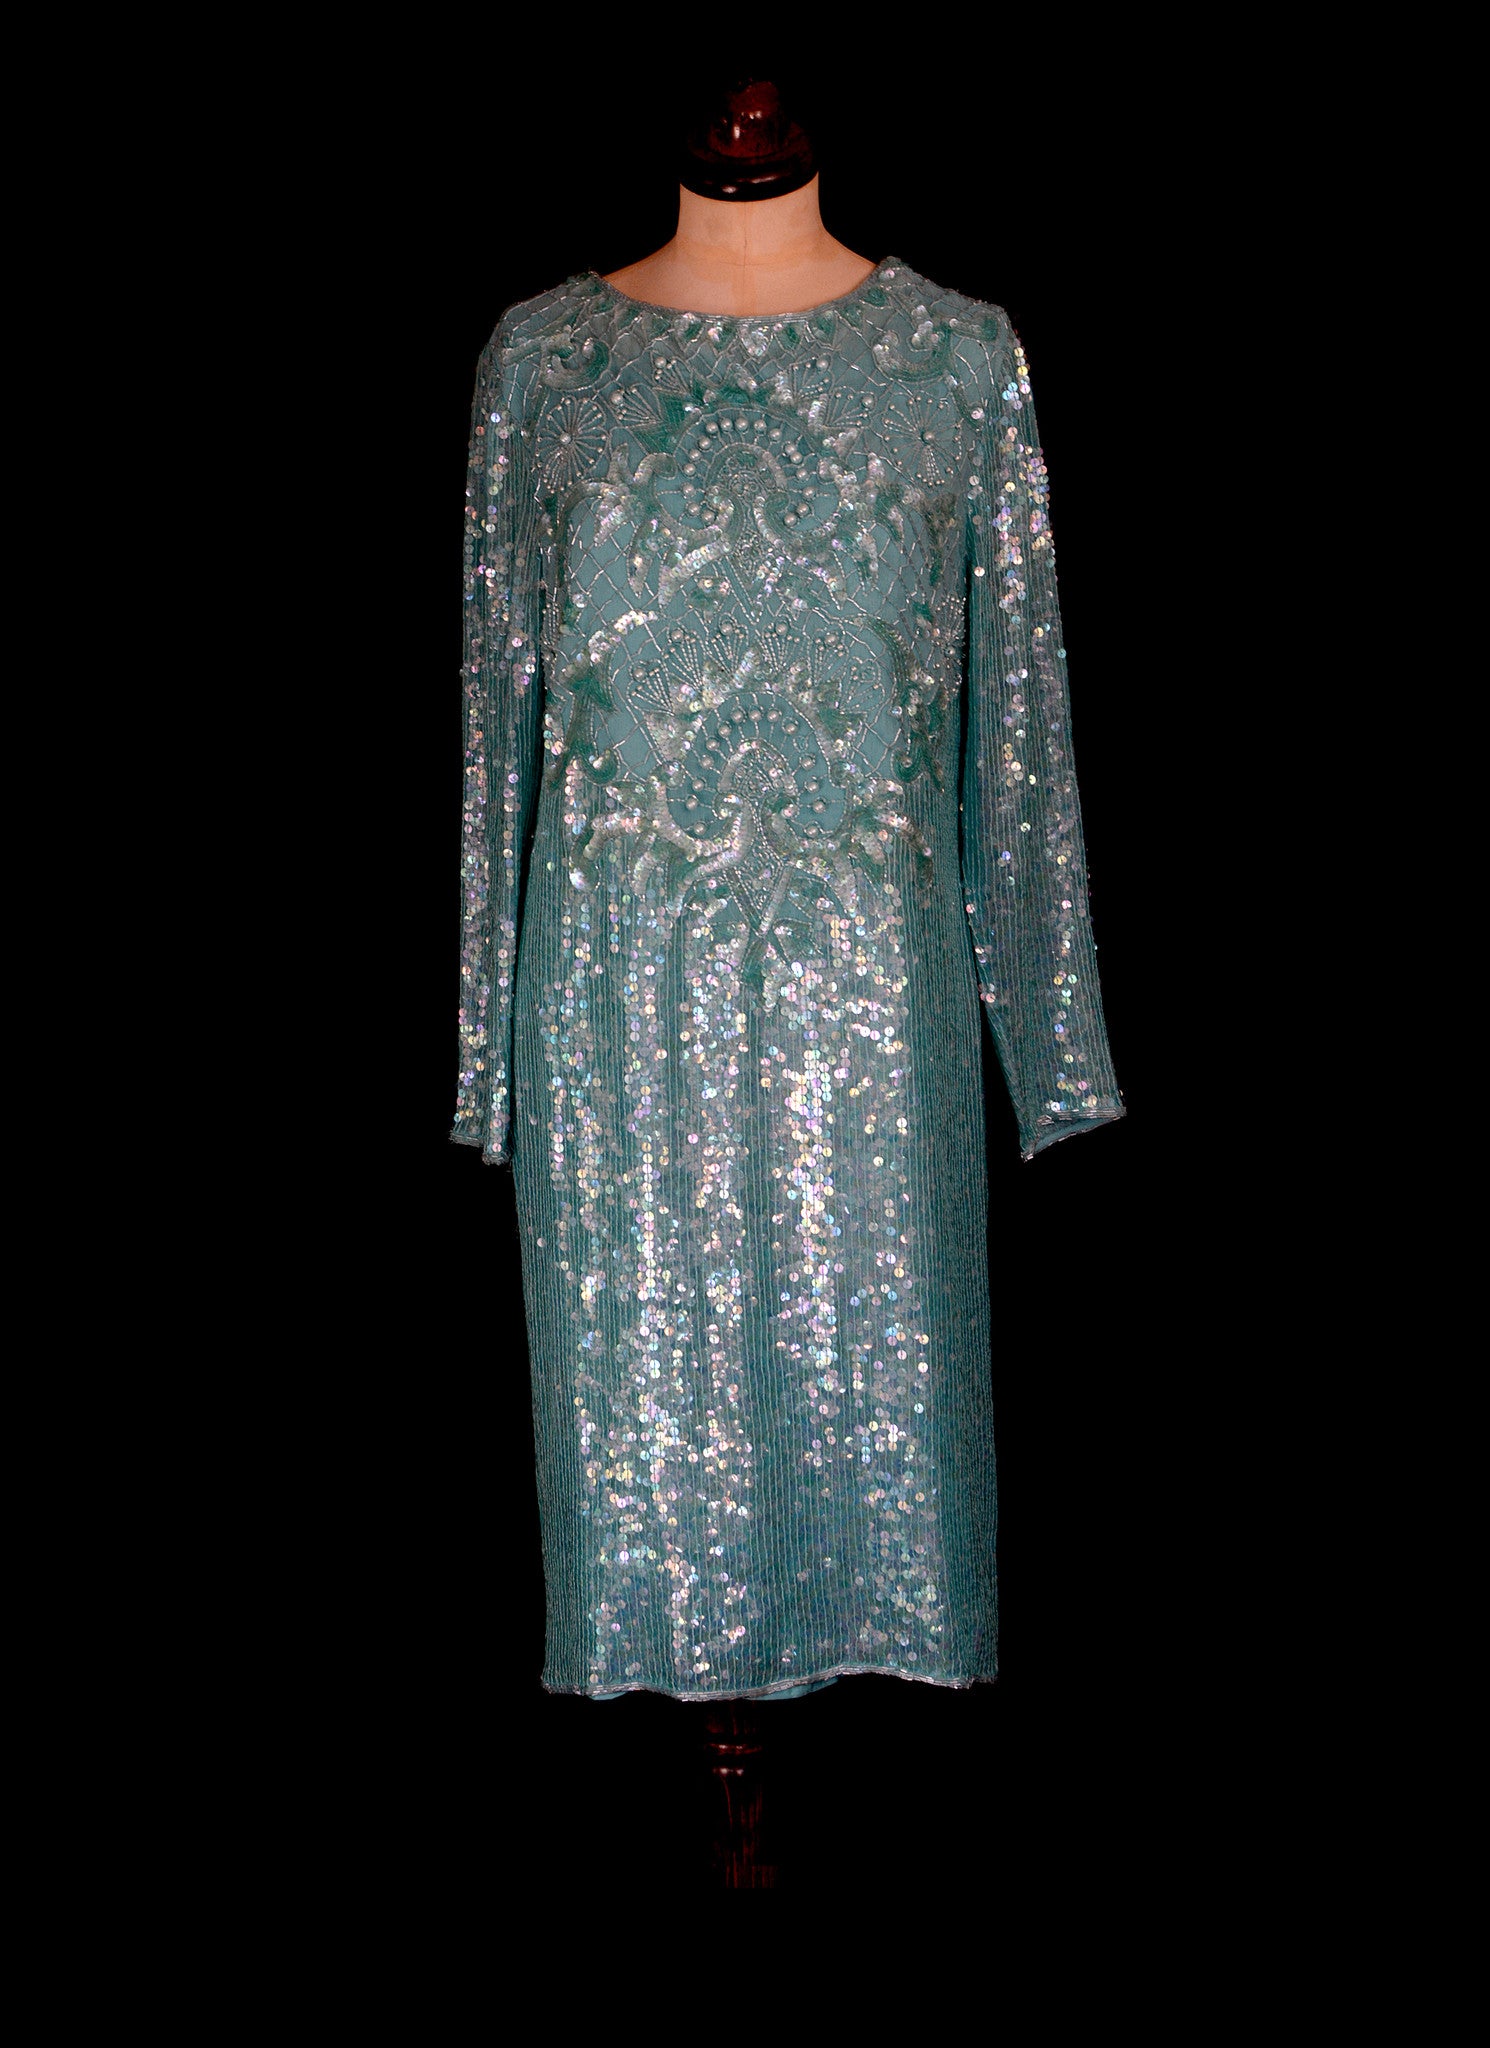 Vintage 1980s Blue Sequin Dress